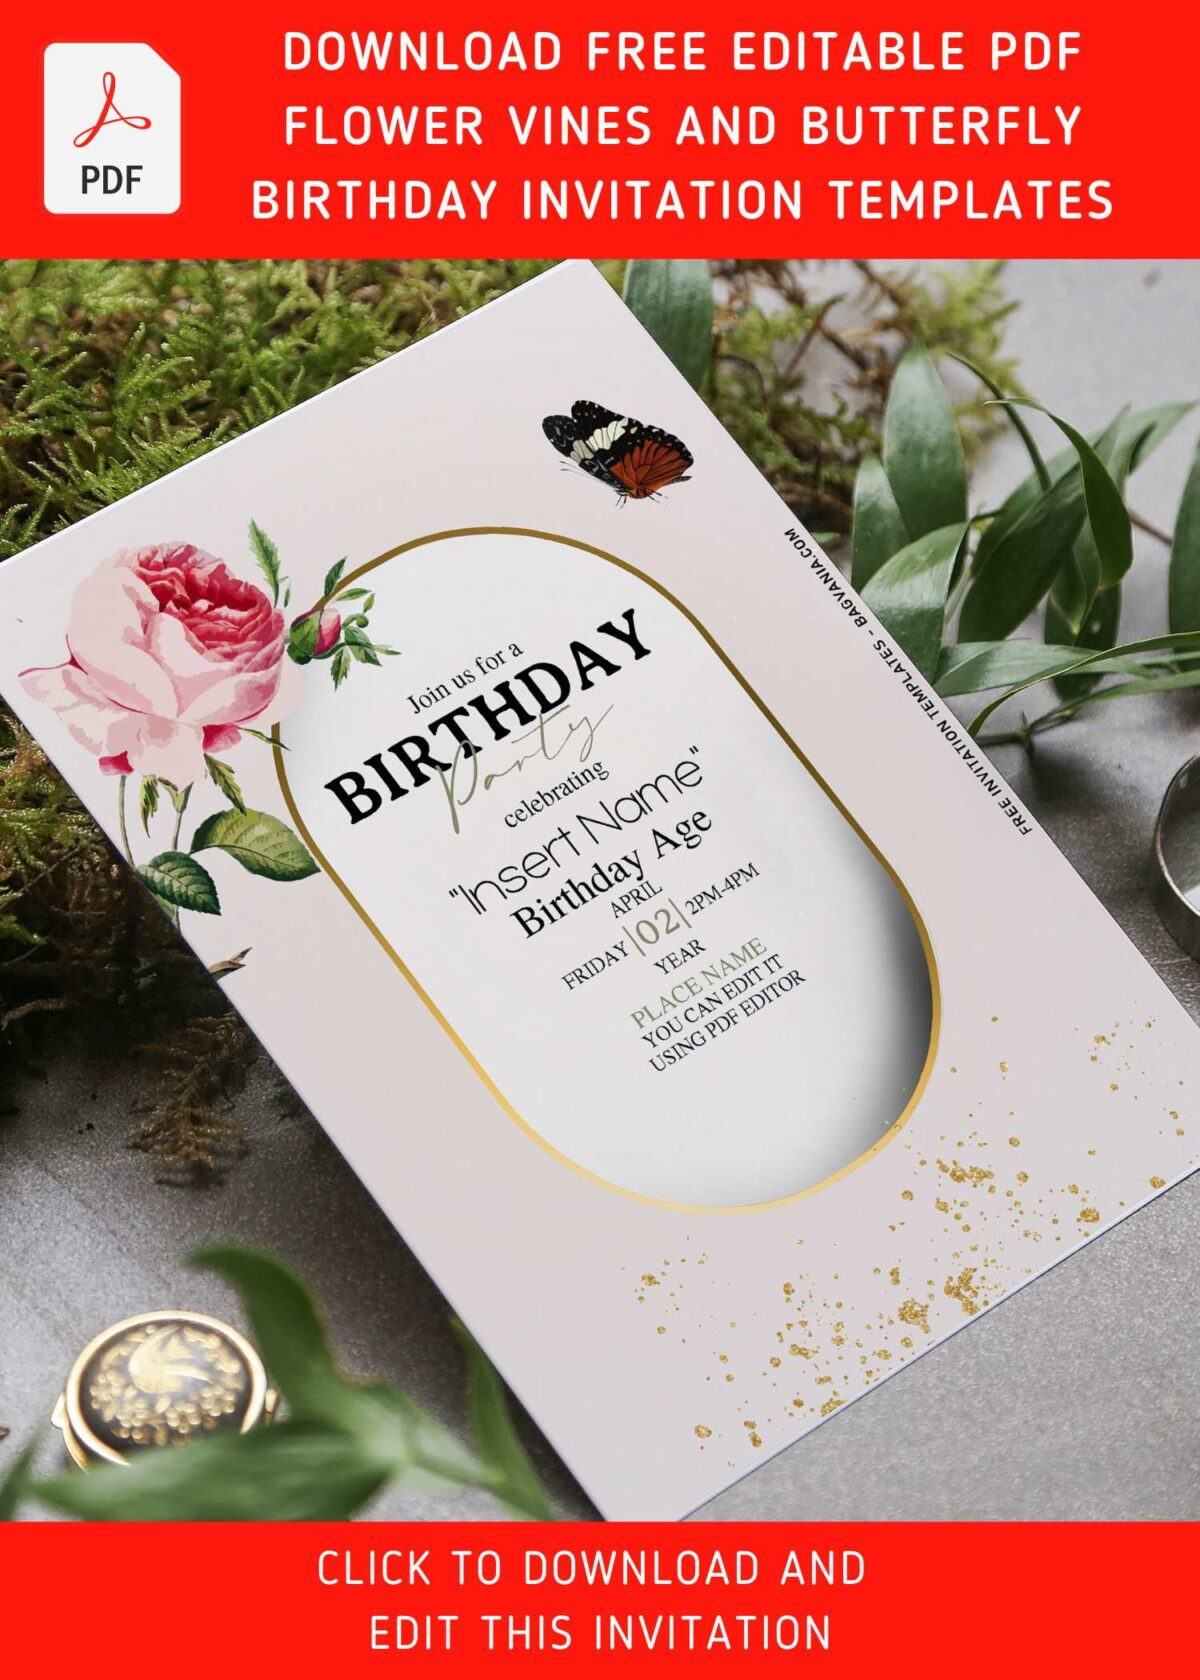 (Free Editable PDF) Butterfly Garden Birthday Invitation Templates with garden rose